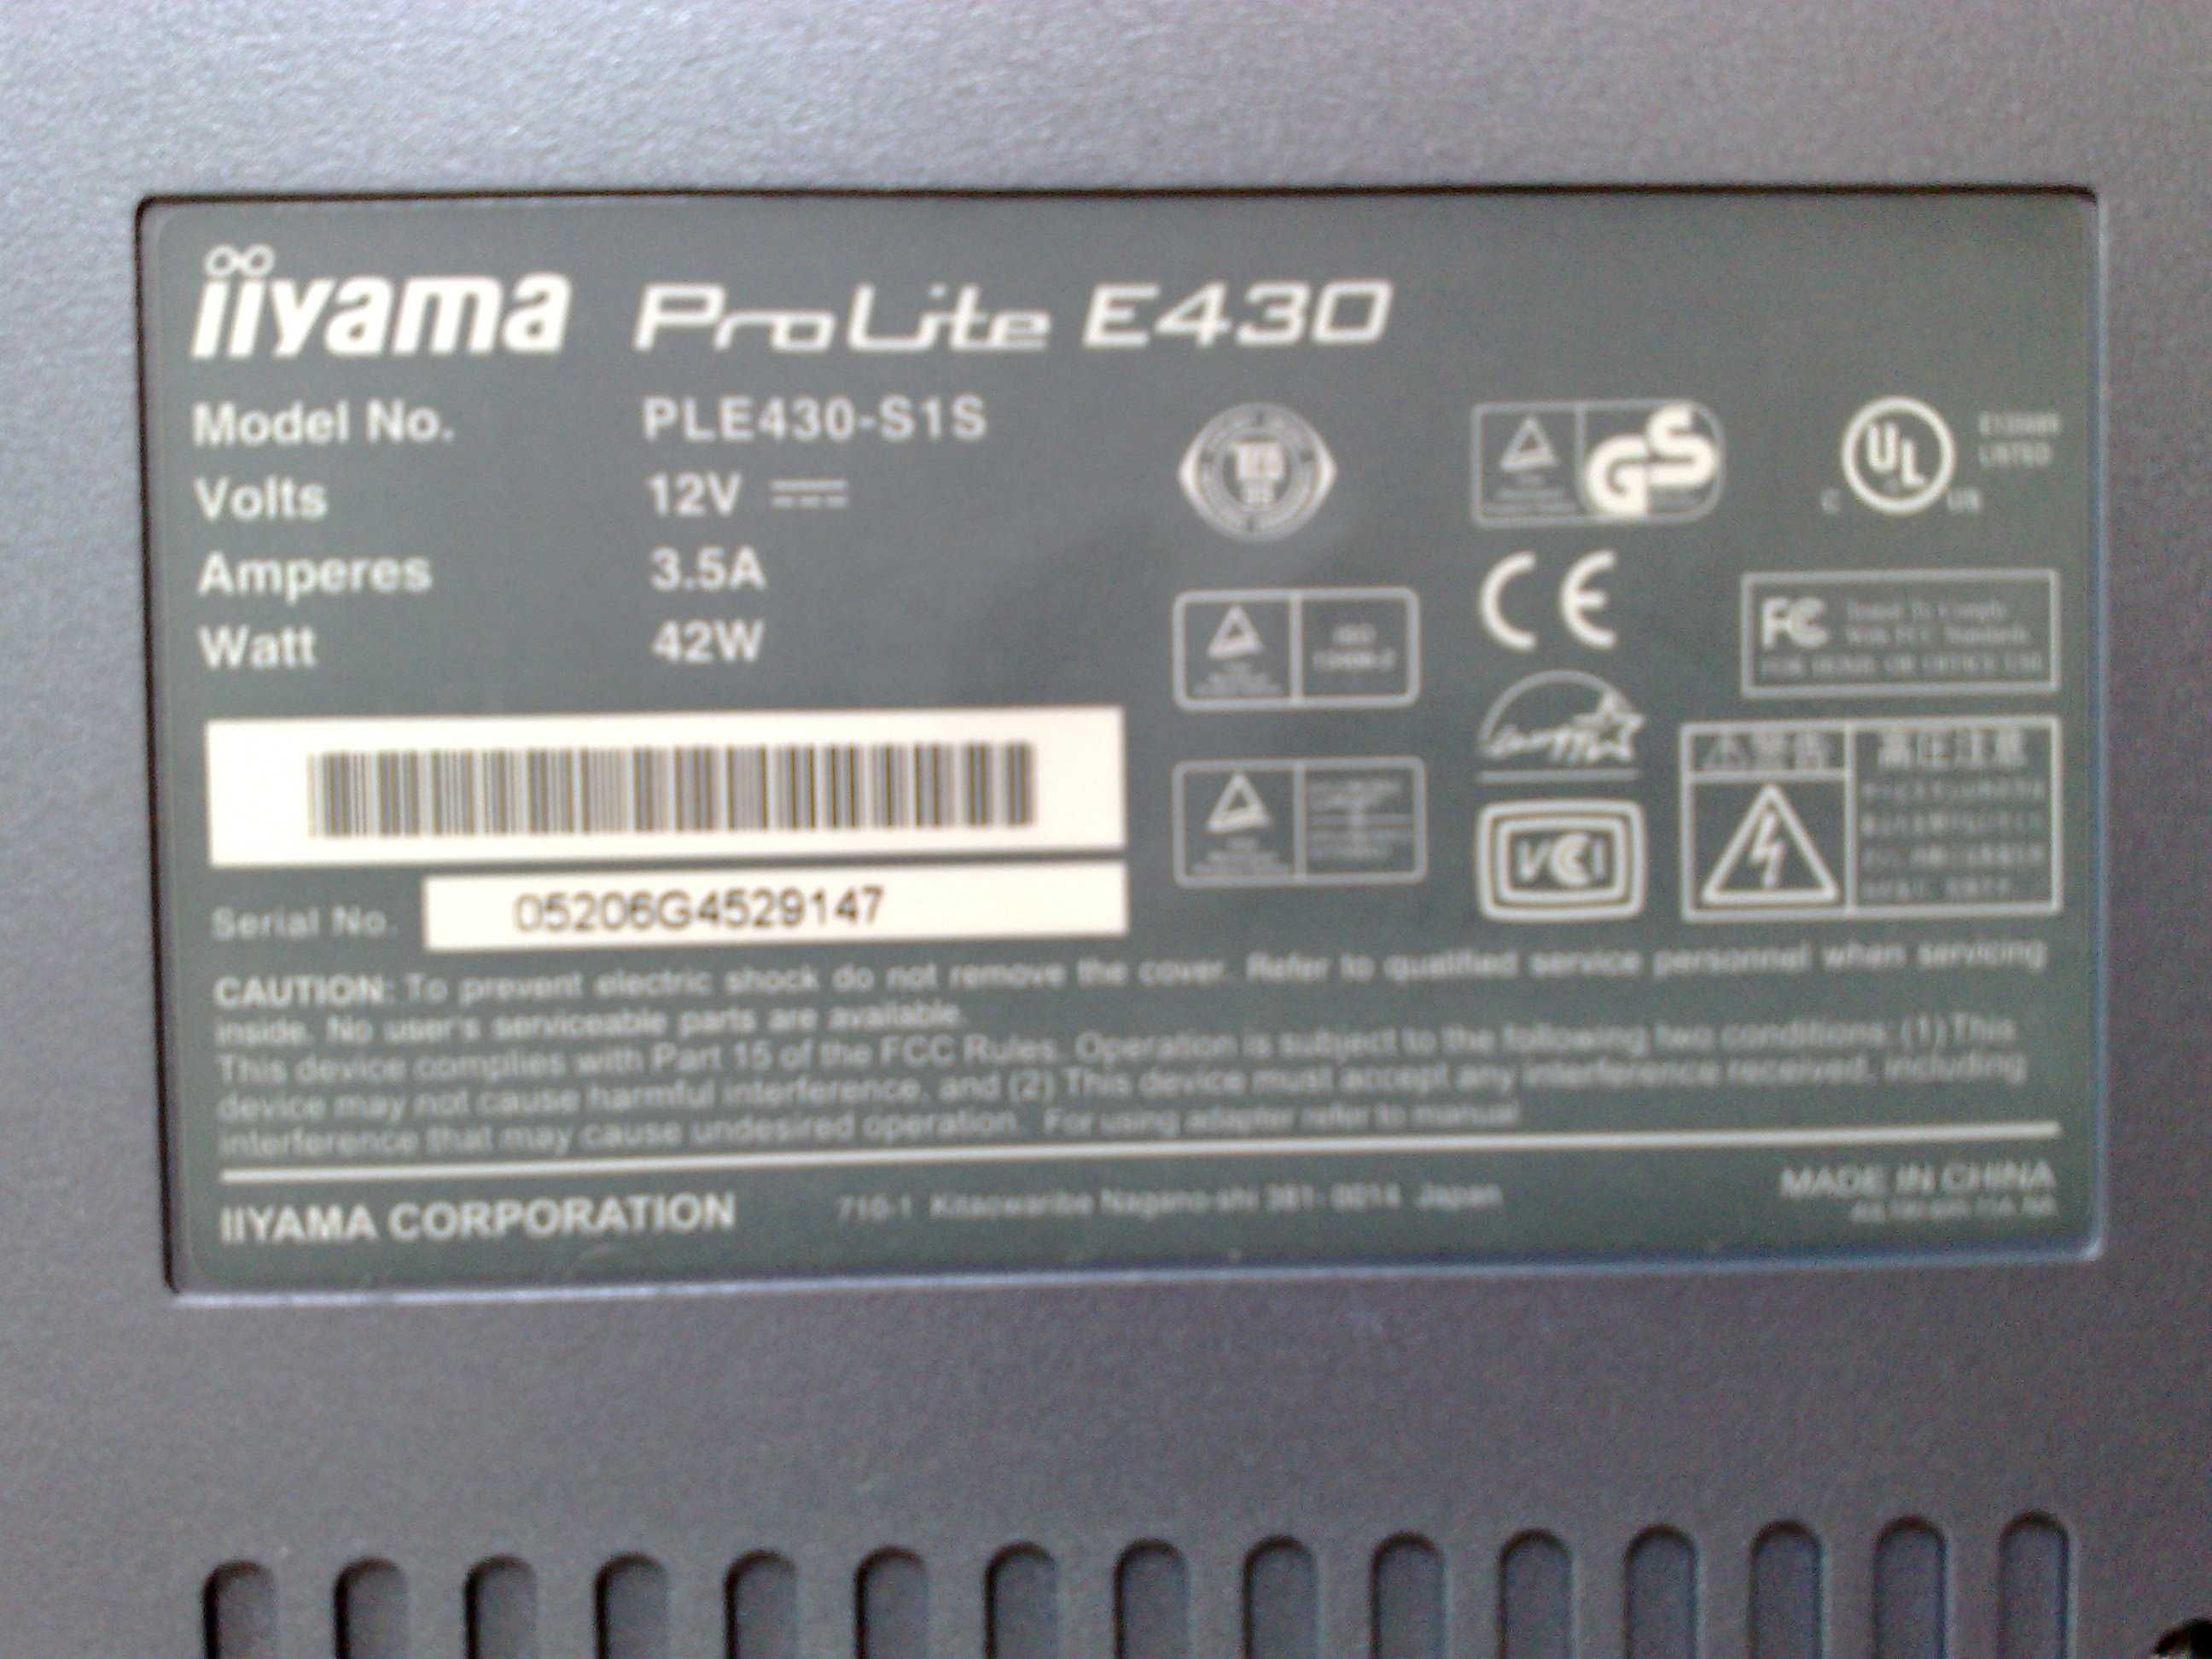 Super Monitor LCD 17 " - iiyama Pro-Lite E430+klawiatura Superb Roller